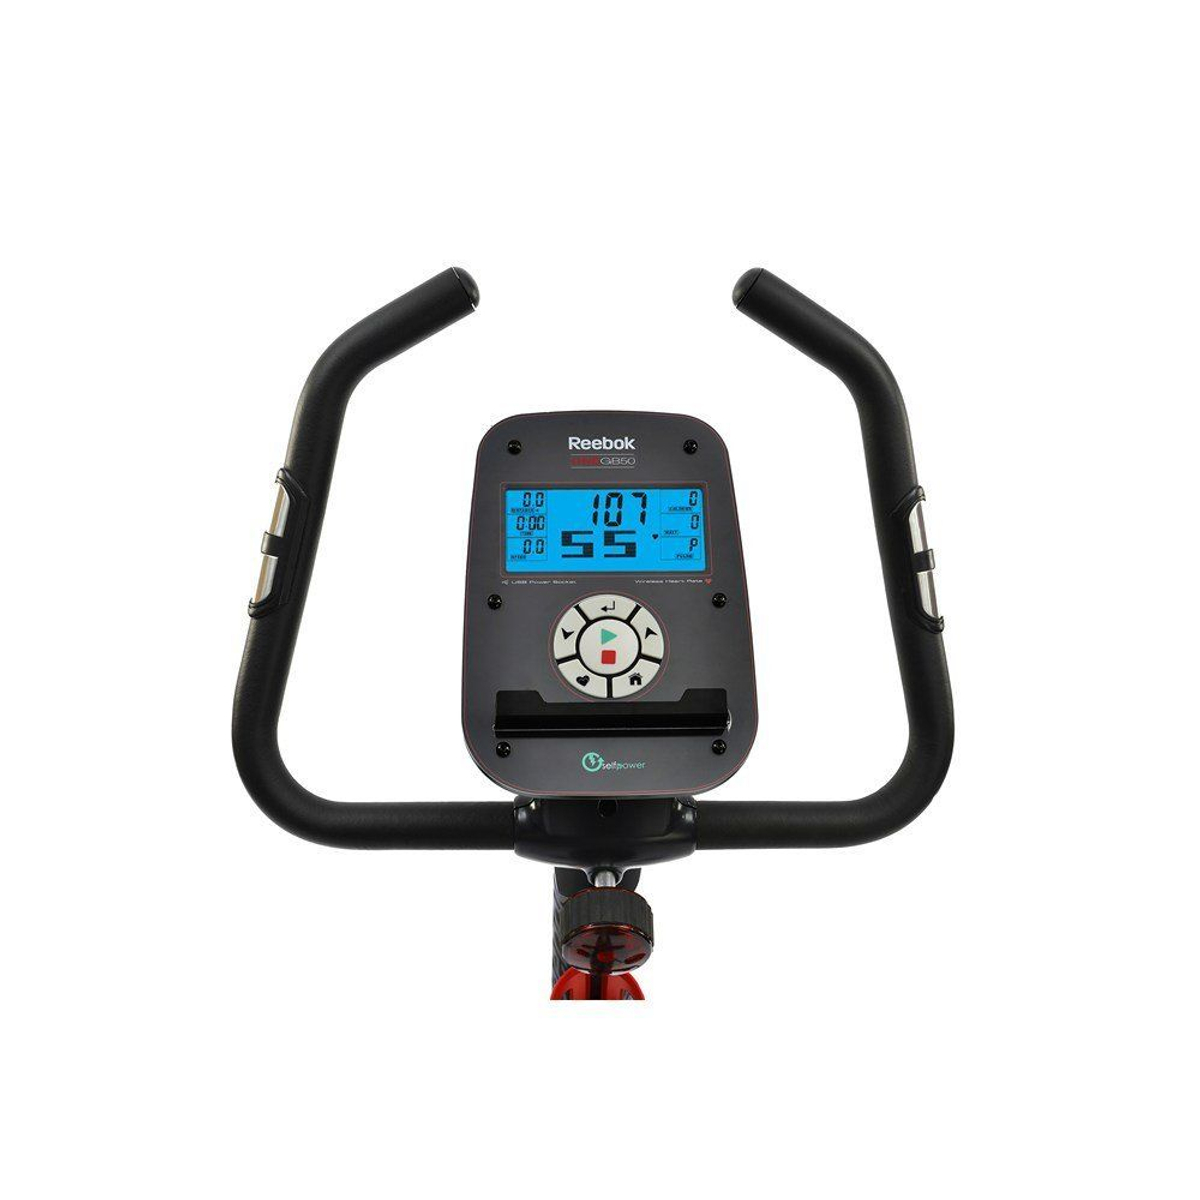  Hometrainer Reebok GB-50 ergometer 